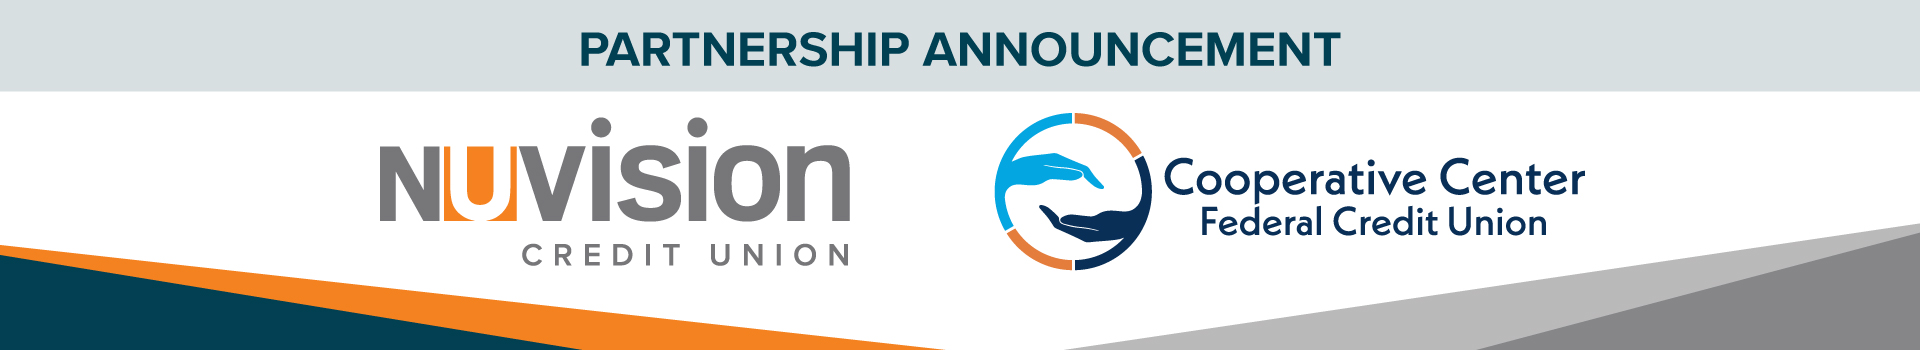 Partnership Announcement: Nuvision CU x Cooperative Center FCU